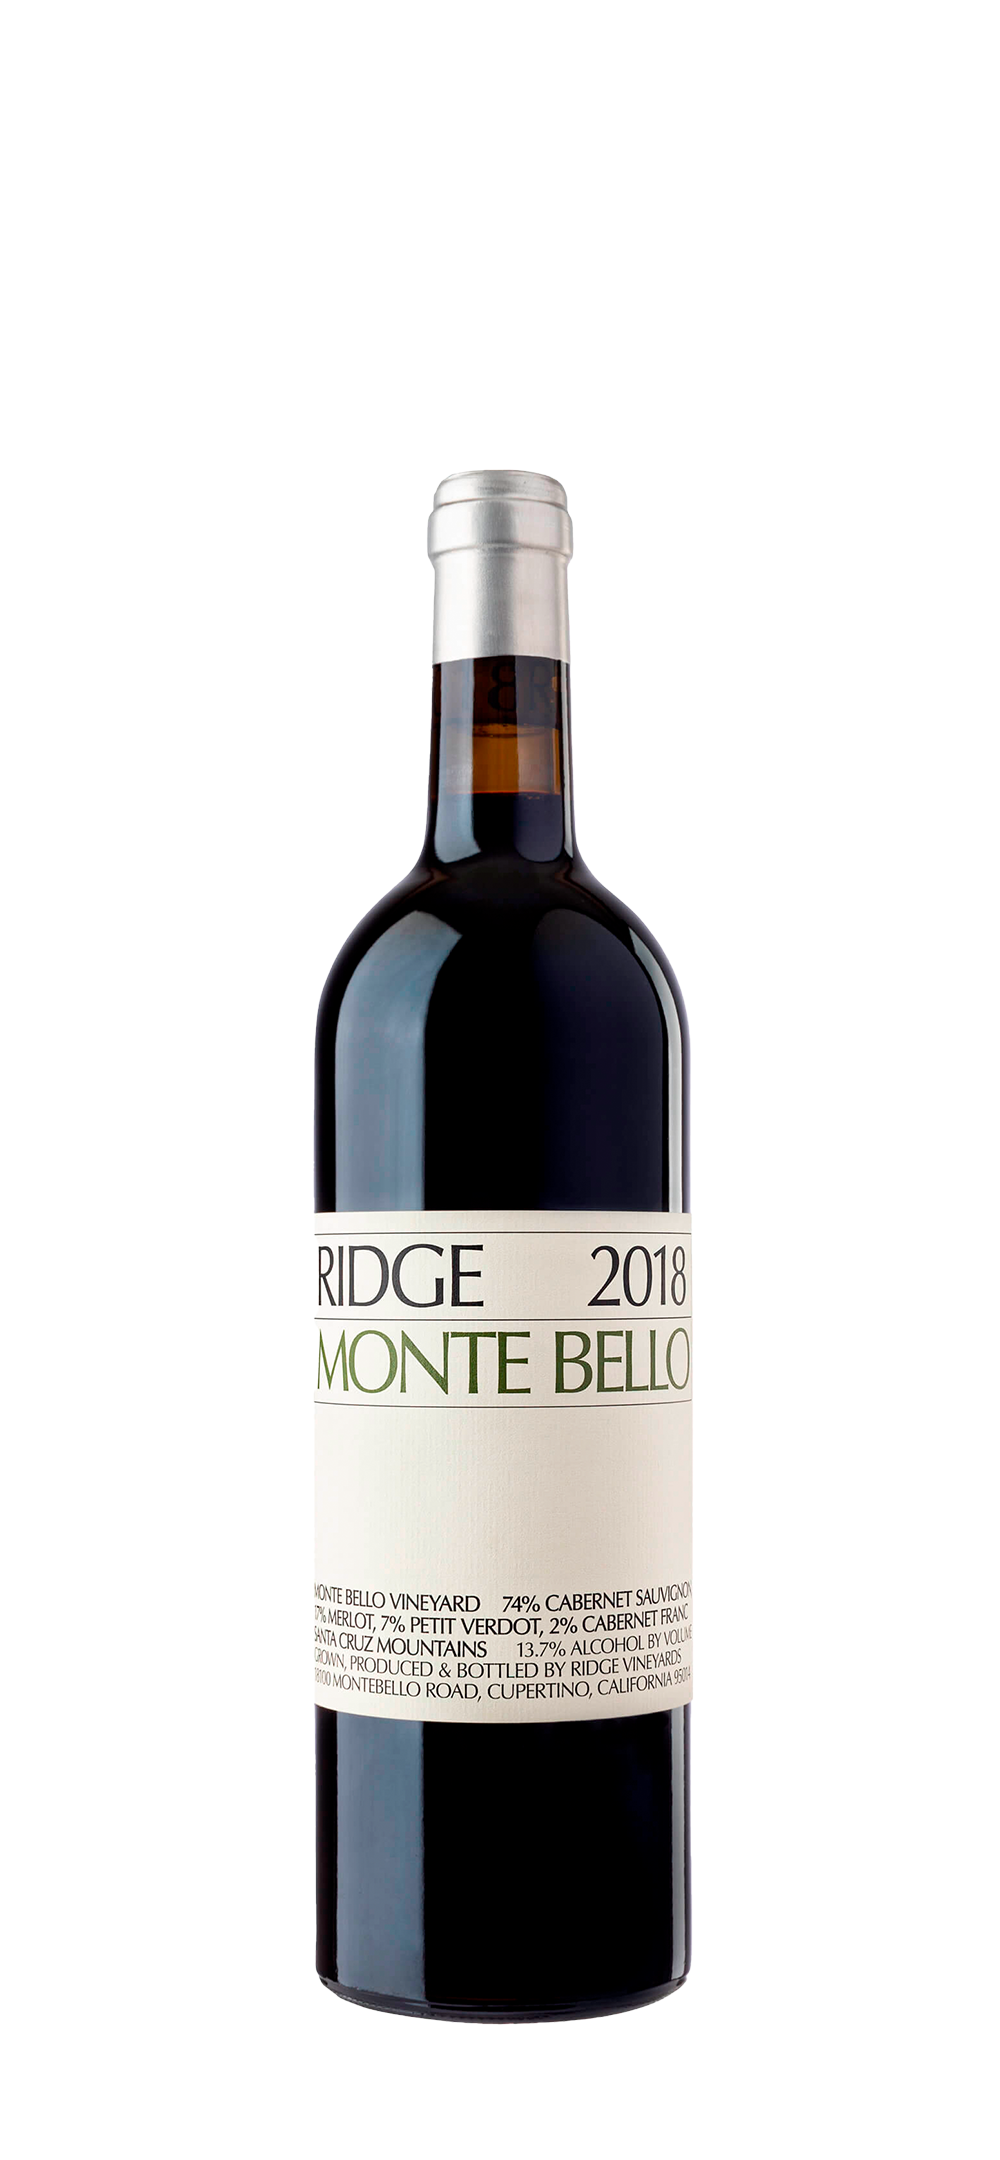 RIDGE Monte Bello 2018